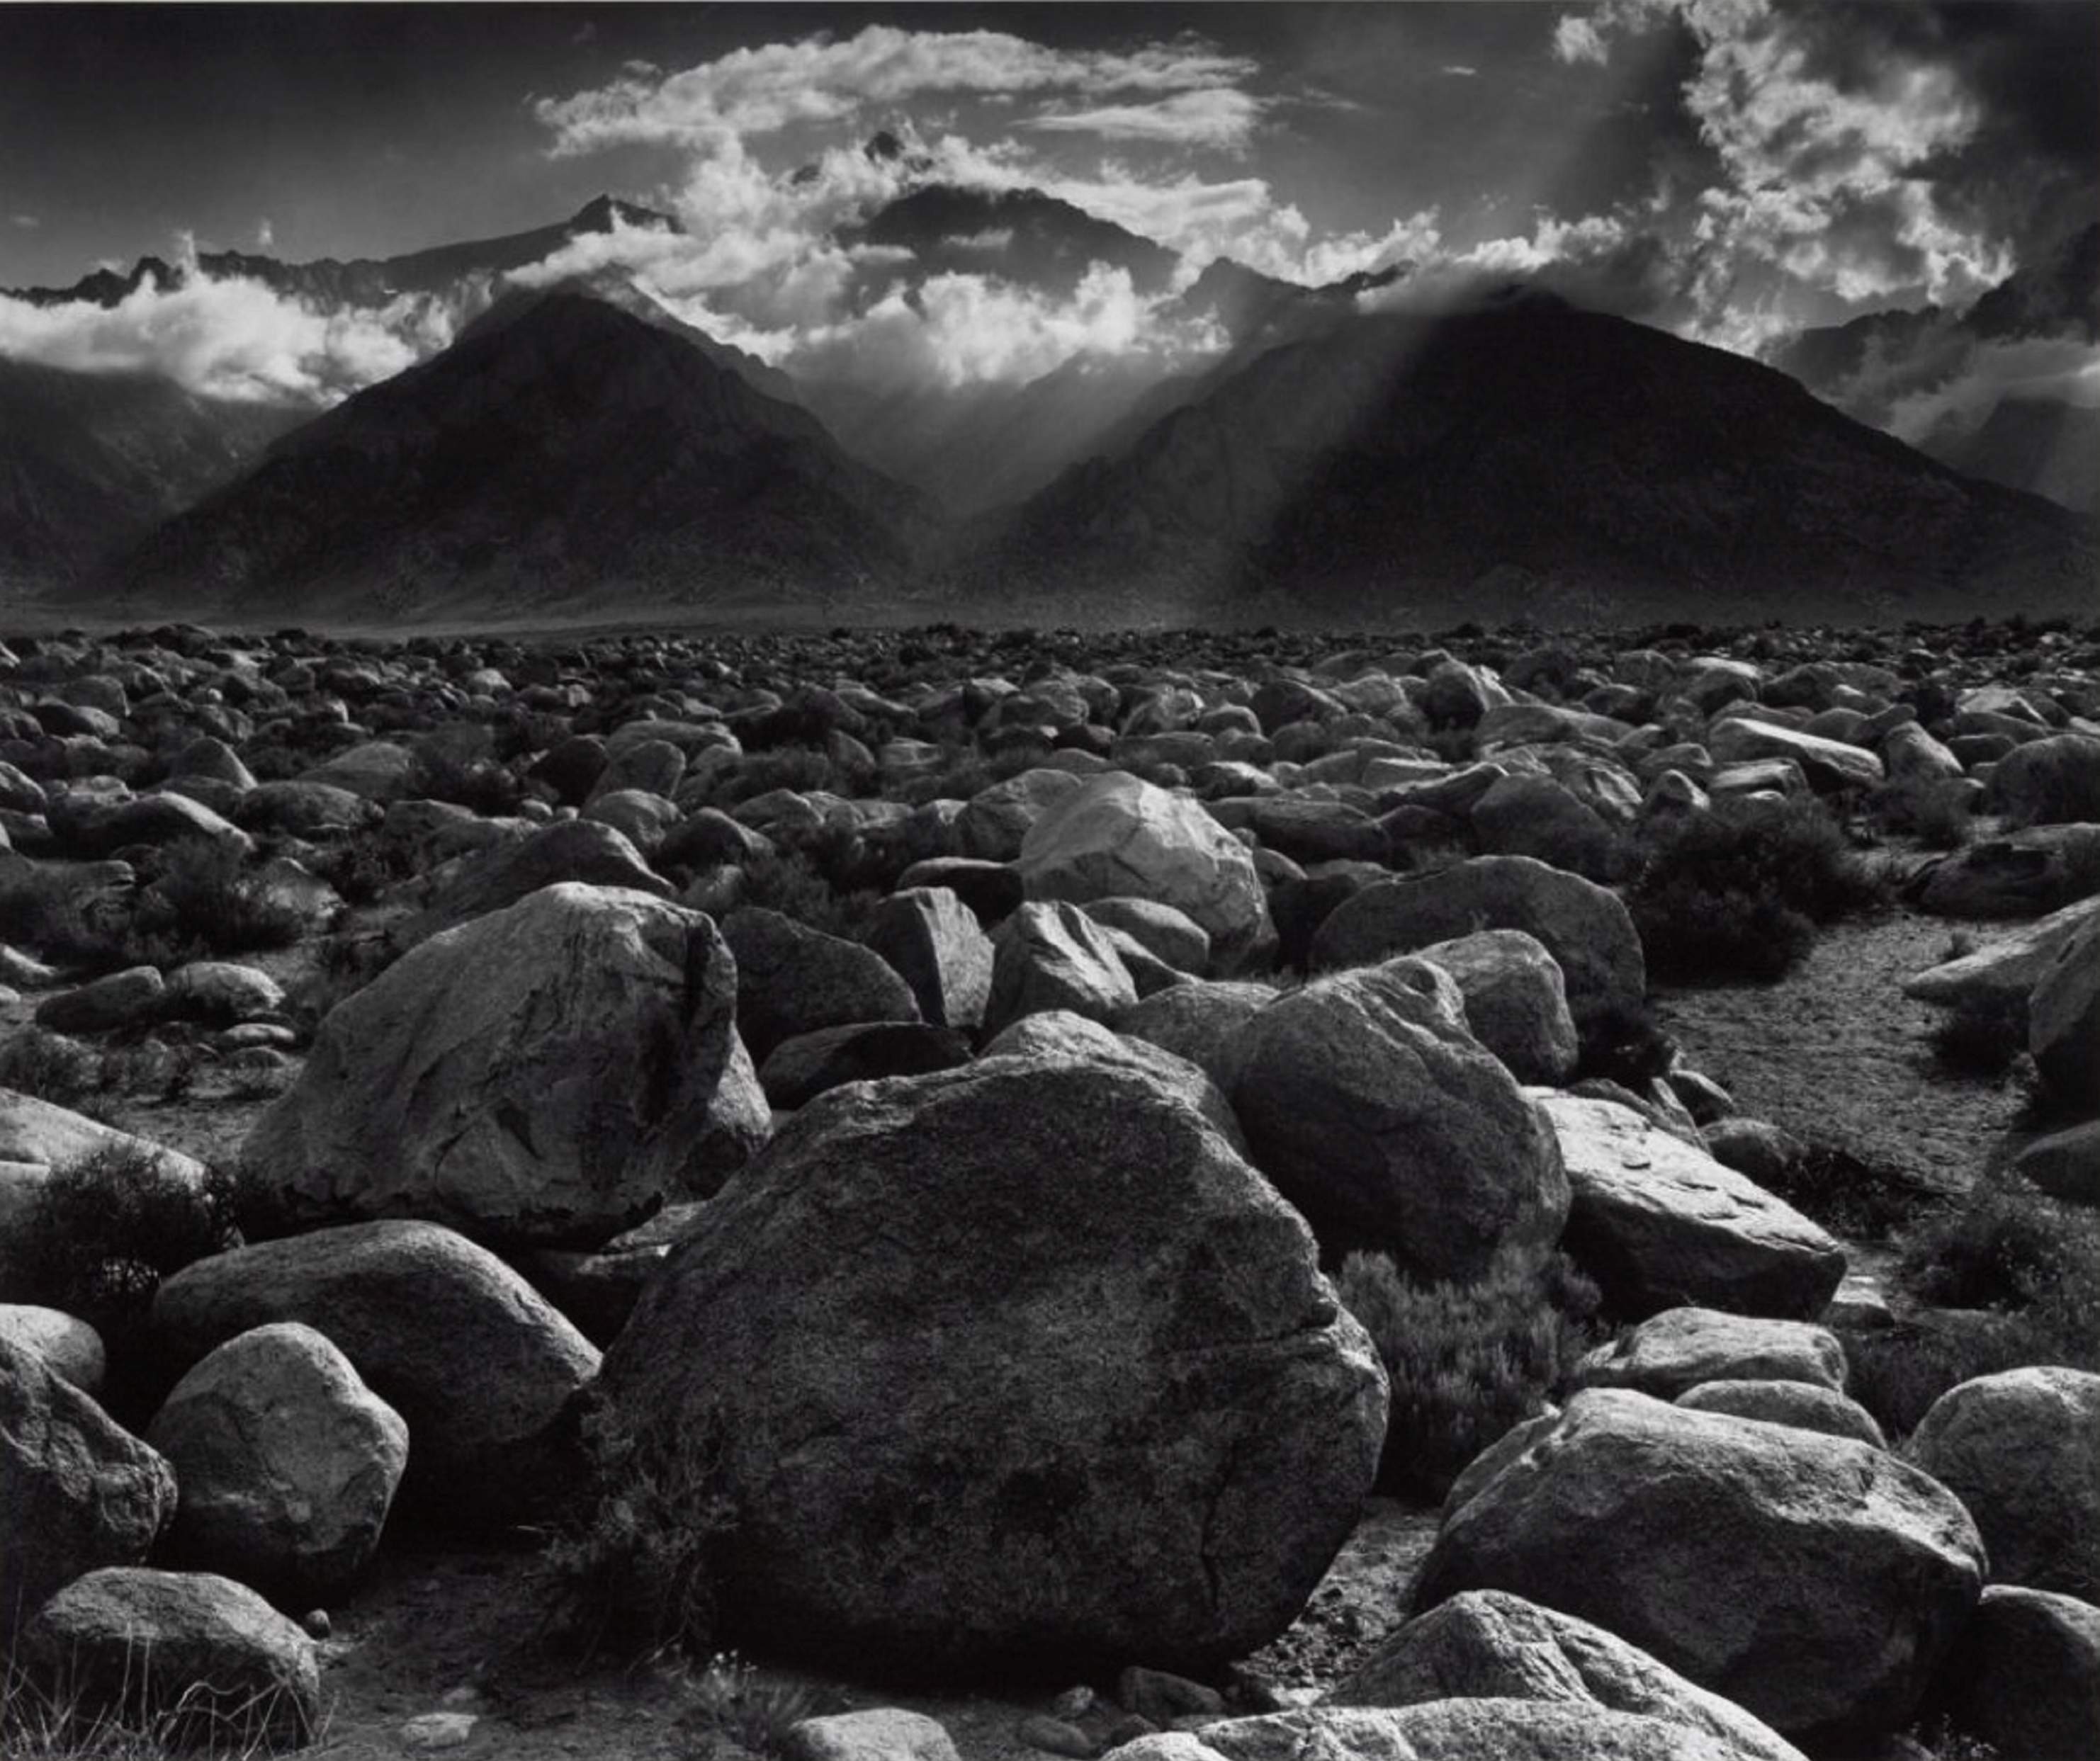 Ansel Adams Images - Mount Williamson Sierra Nevada - 2964x2486 Wallpaper -  